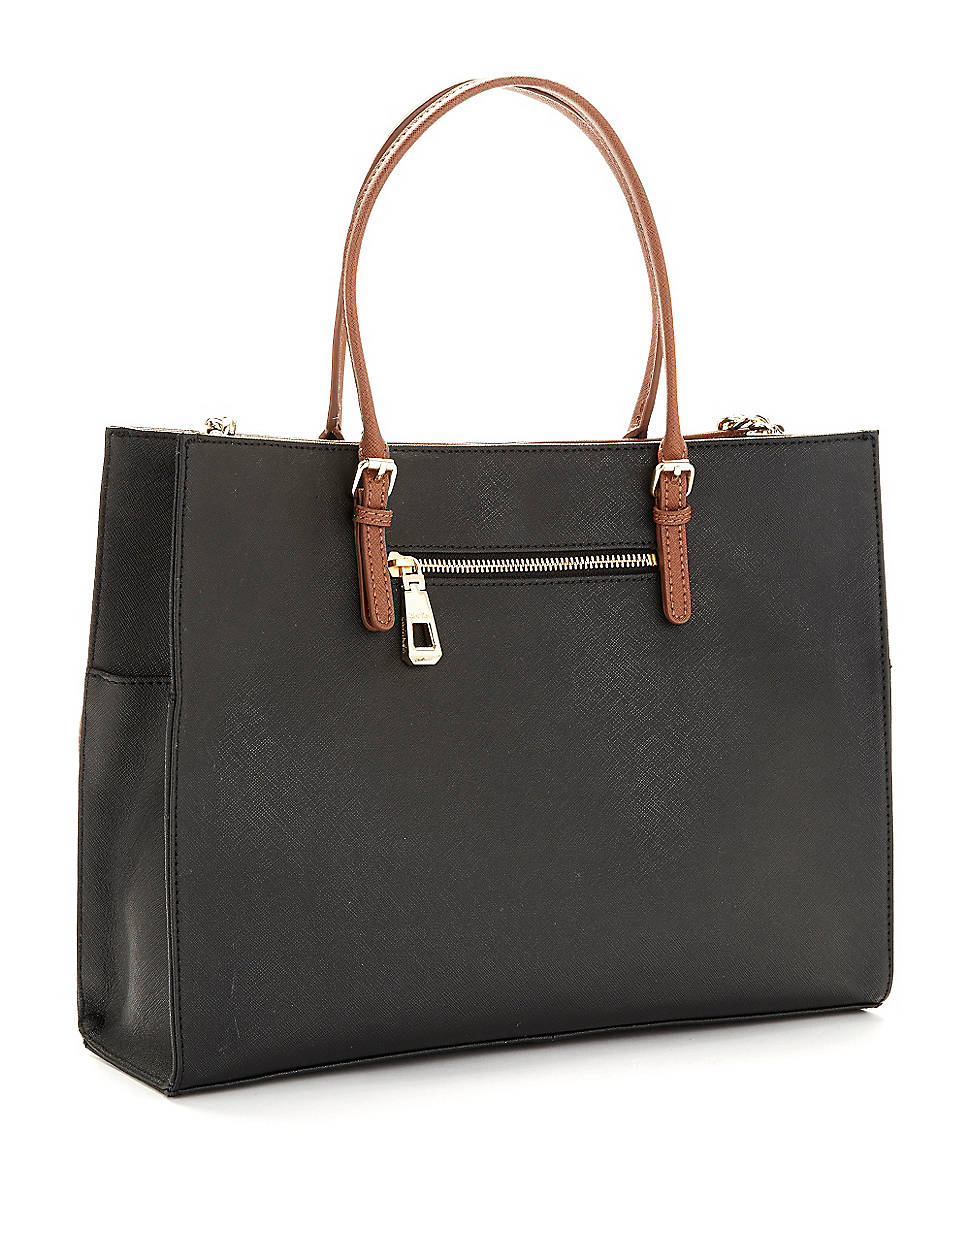 Calvin Klein Leather Satchel Handbag in Black | Lyst